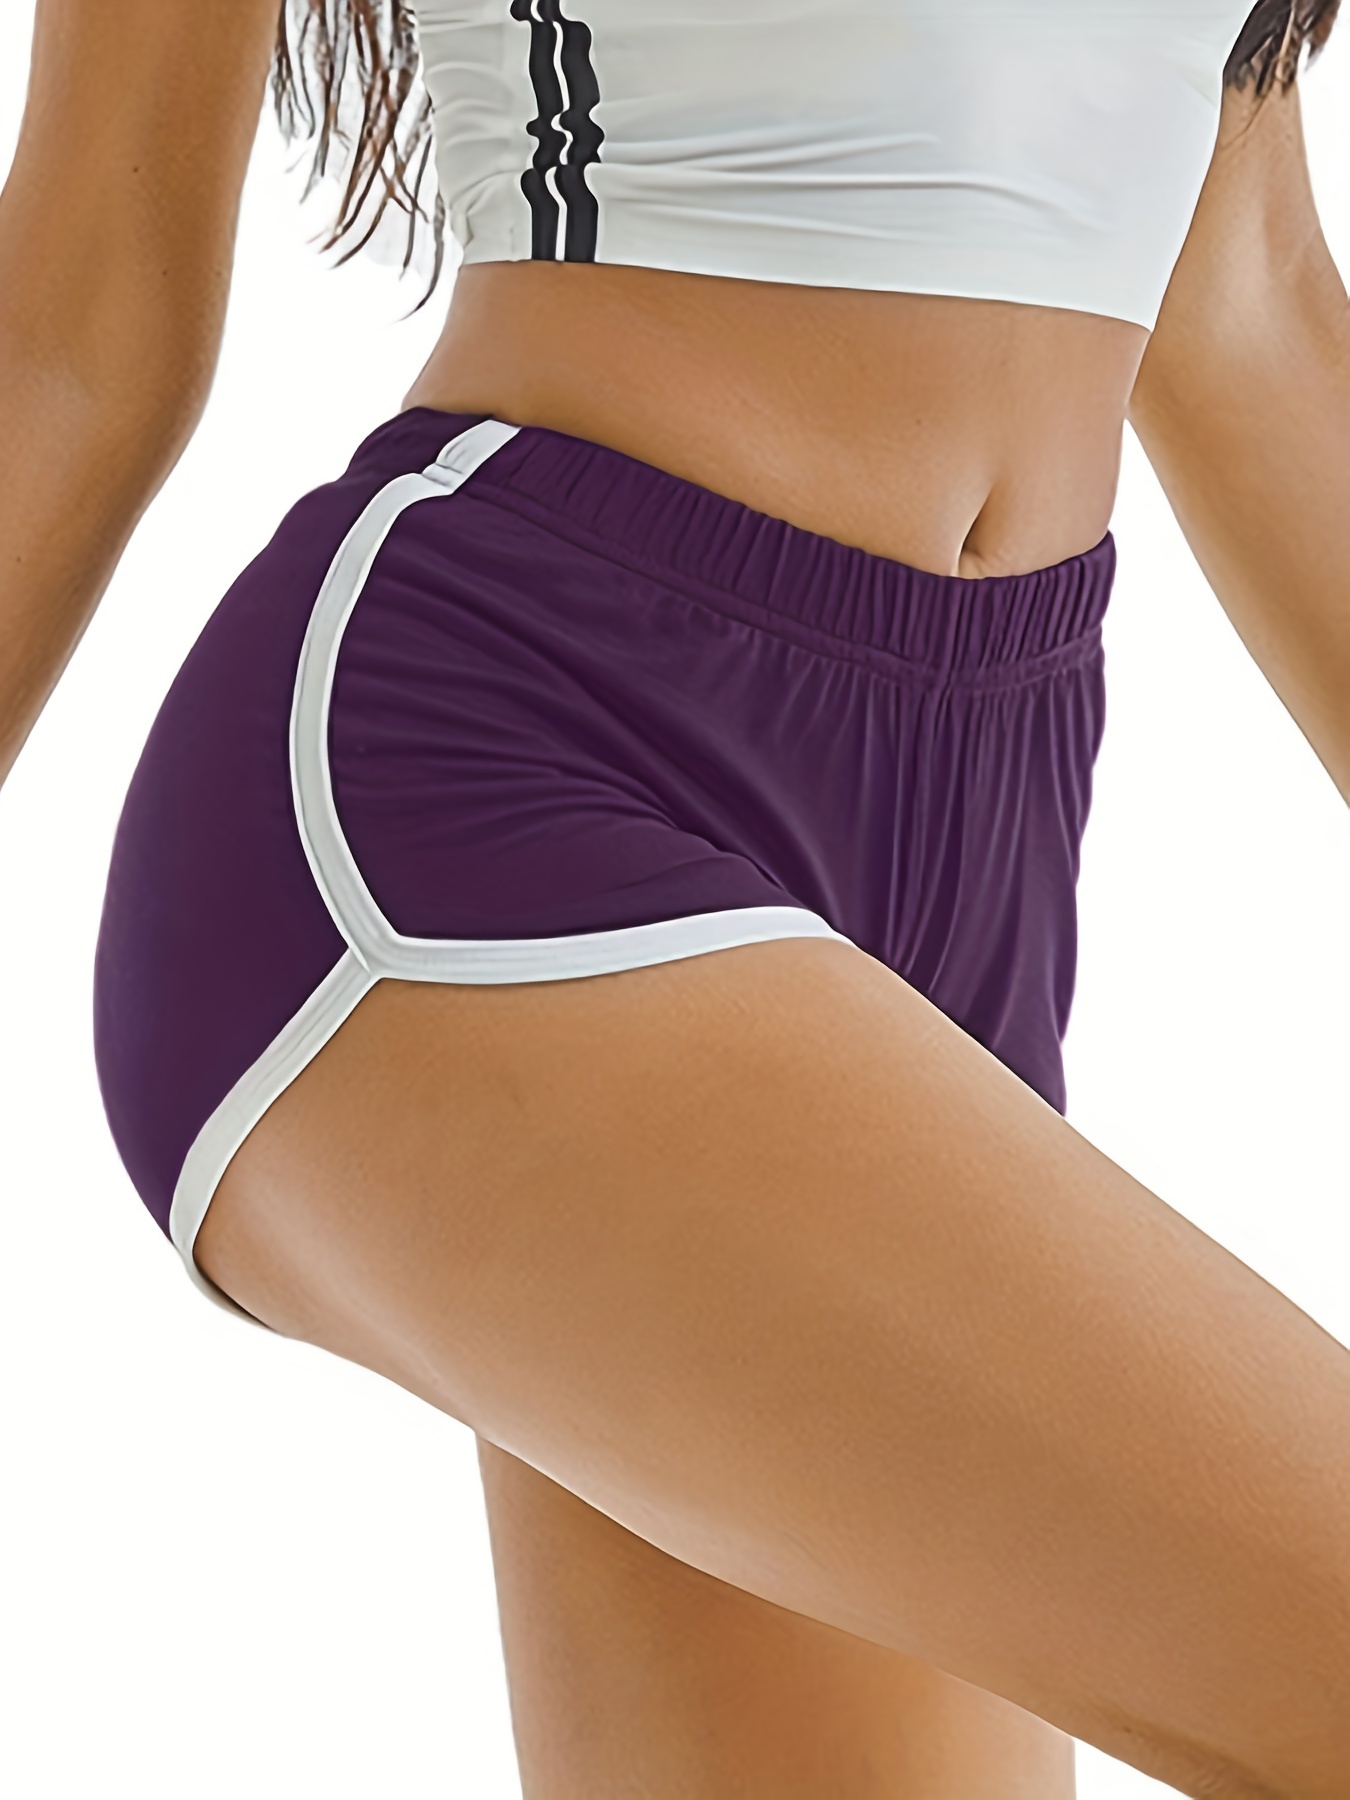 Women Summer Shorts Sport Yoga Workout Fitness Running Tight Leggings  Striped Slim Hot Pants Beach Gym Casual Pants 